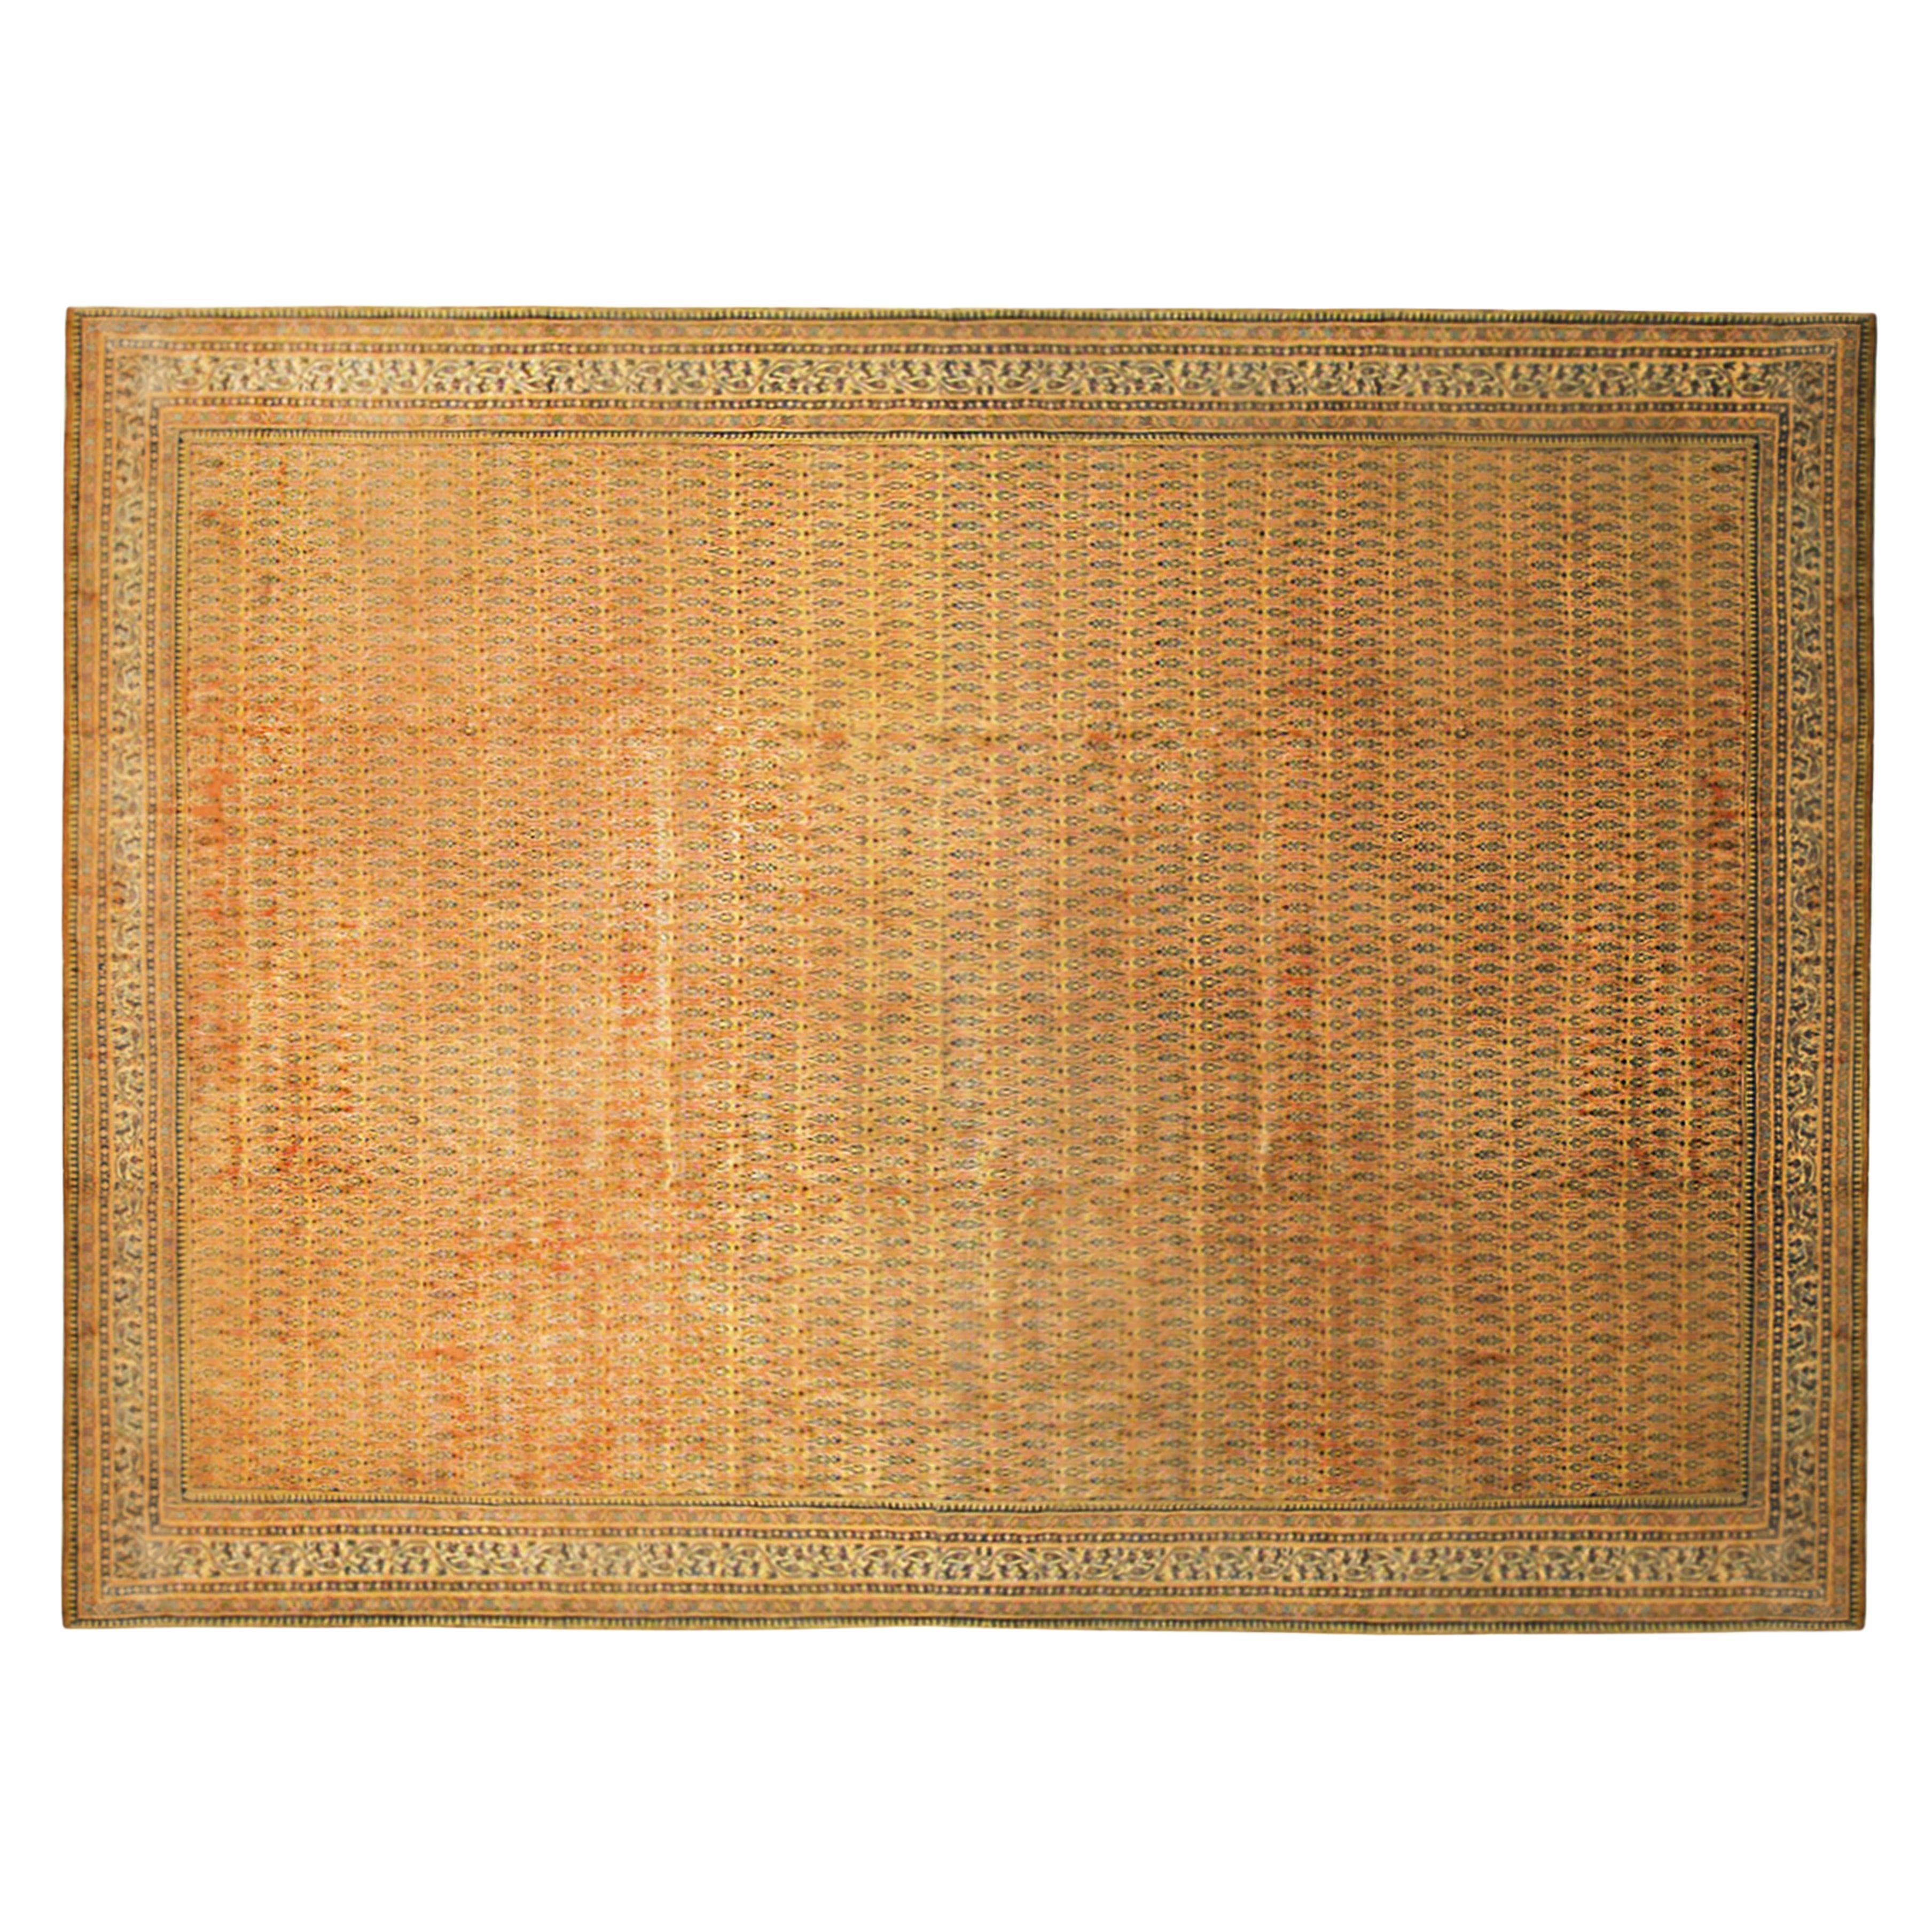 Antique Indian Decorative Oriental Indo Saraband Rug in Large Size 